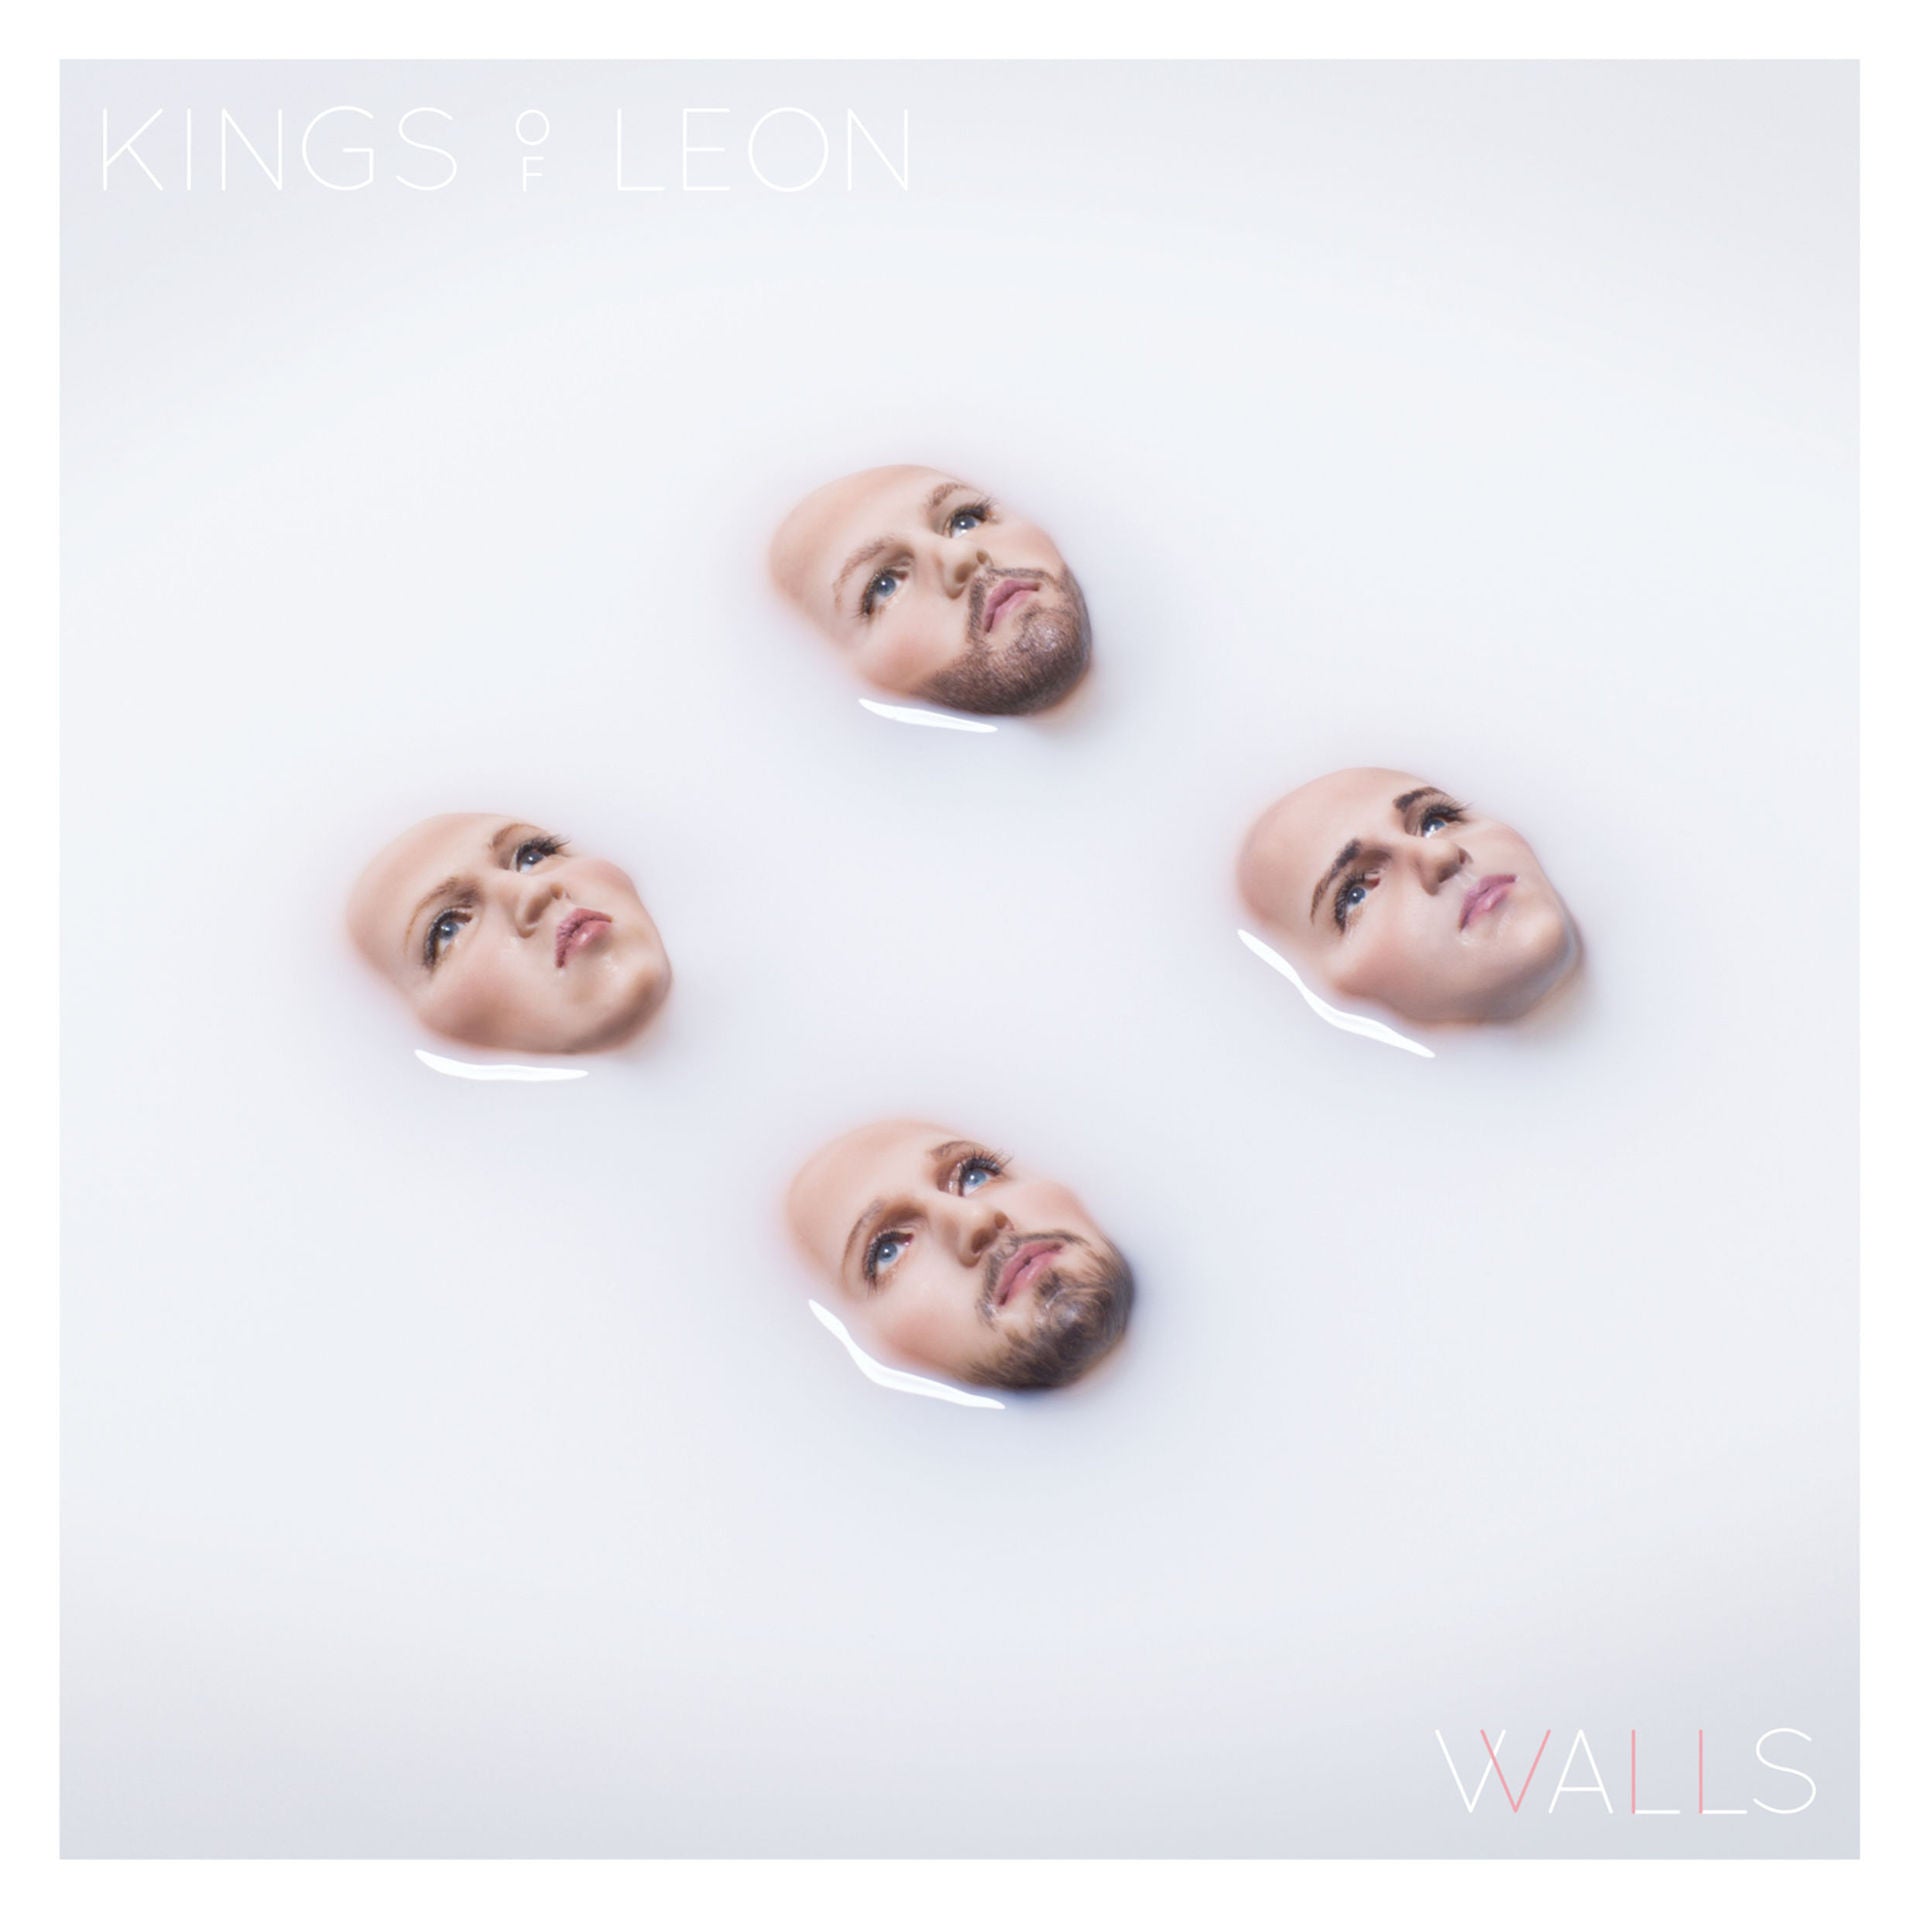 Kings Of Leon - Walls - New LP Record 2016 RCA 180 gram Vinyl & Insert - Indie Rock / Alternative Rock